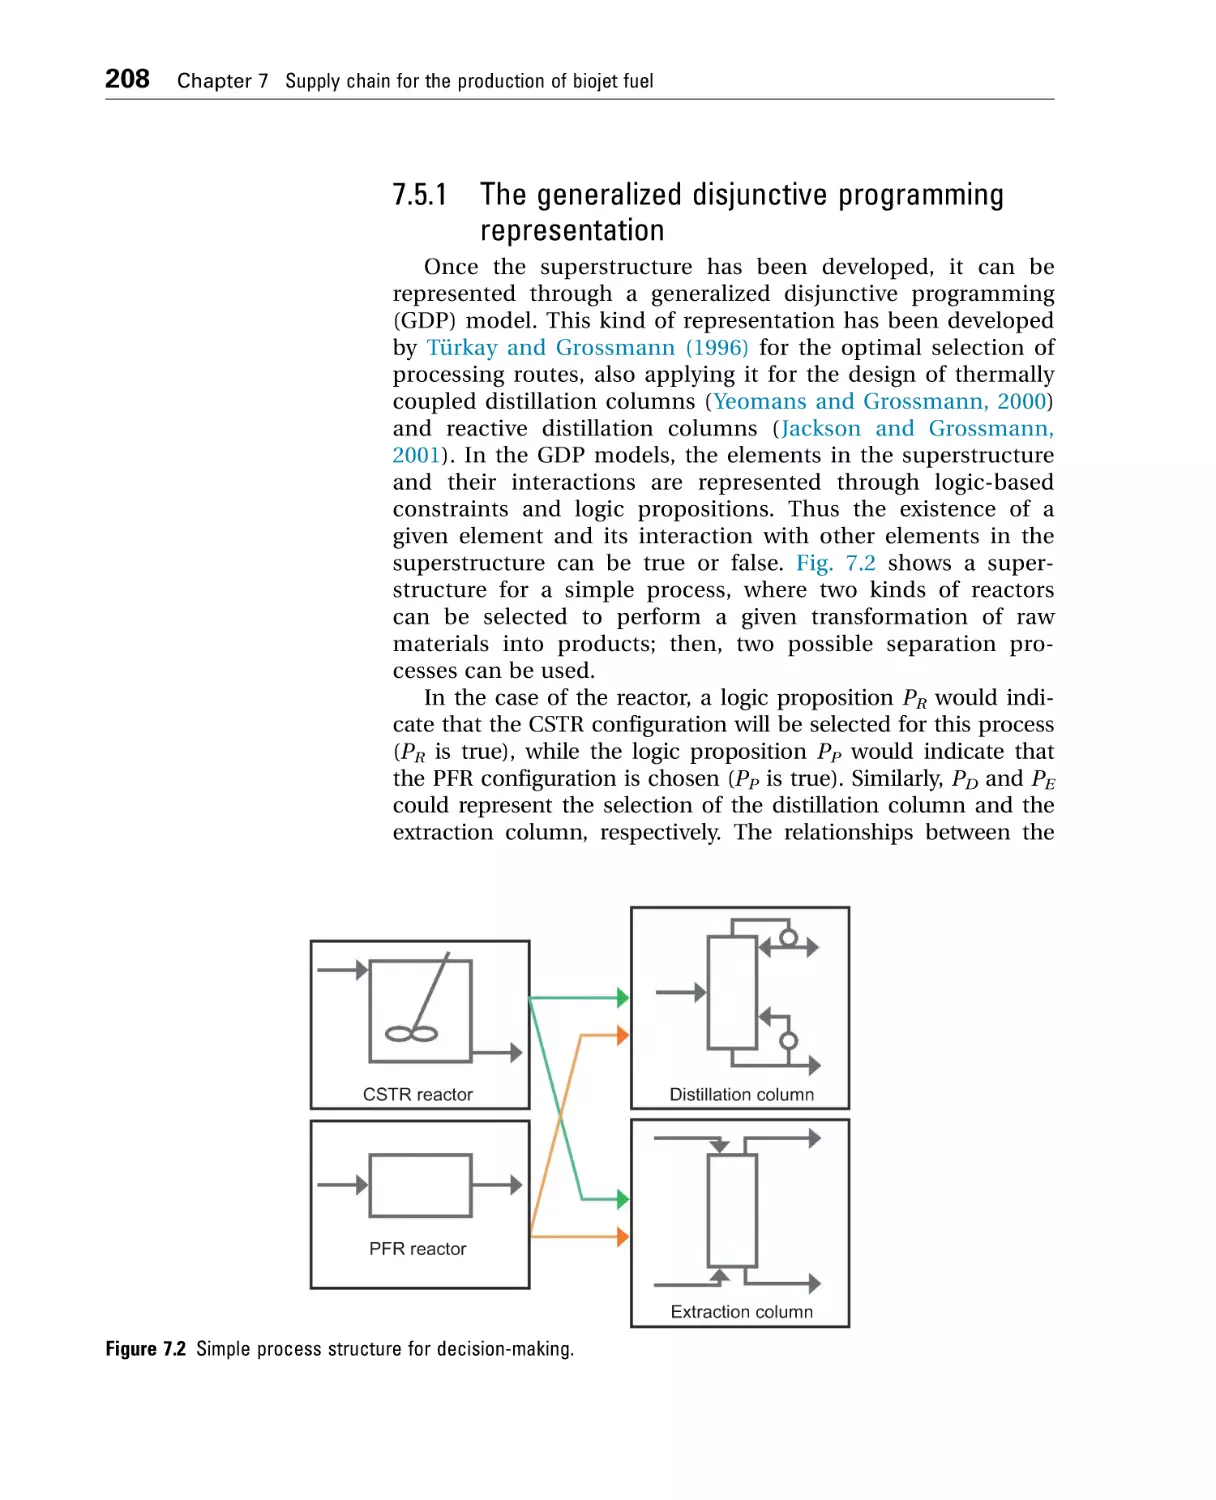 7.5.1 The generalized disjunctive programming representation